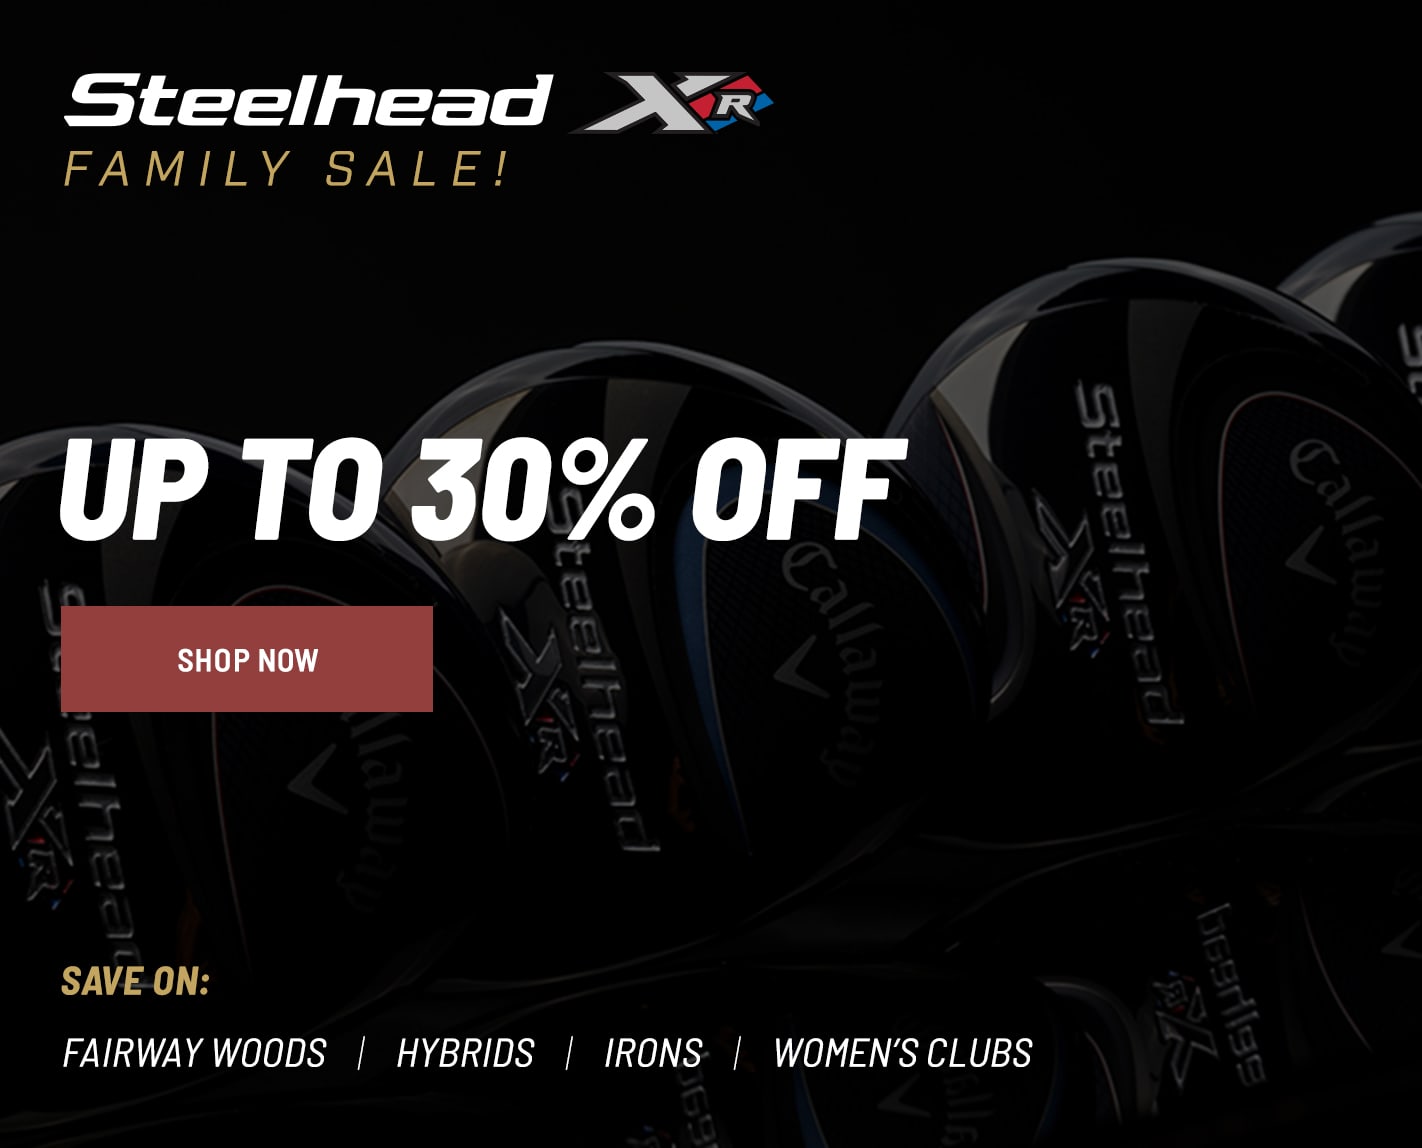 Steelhead XR Family Sale: Up To 30% OFF